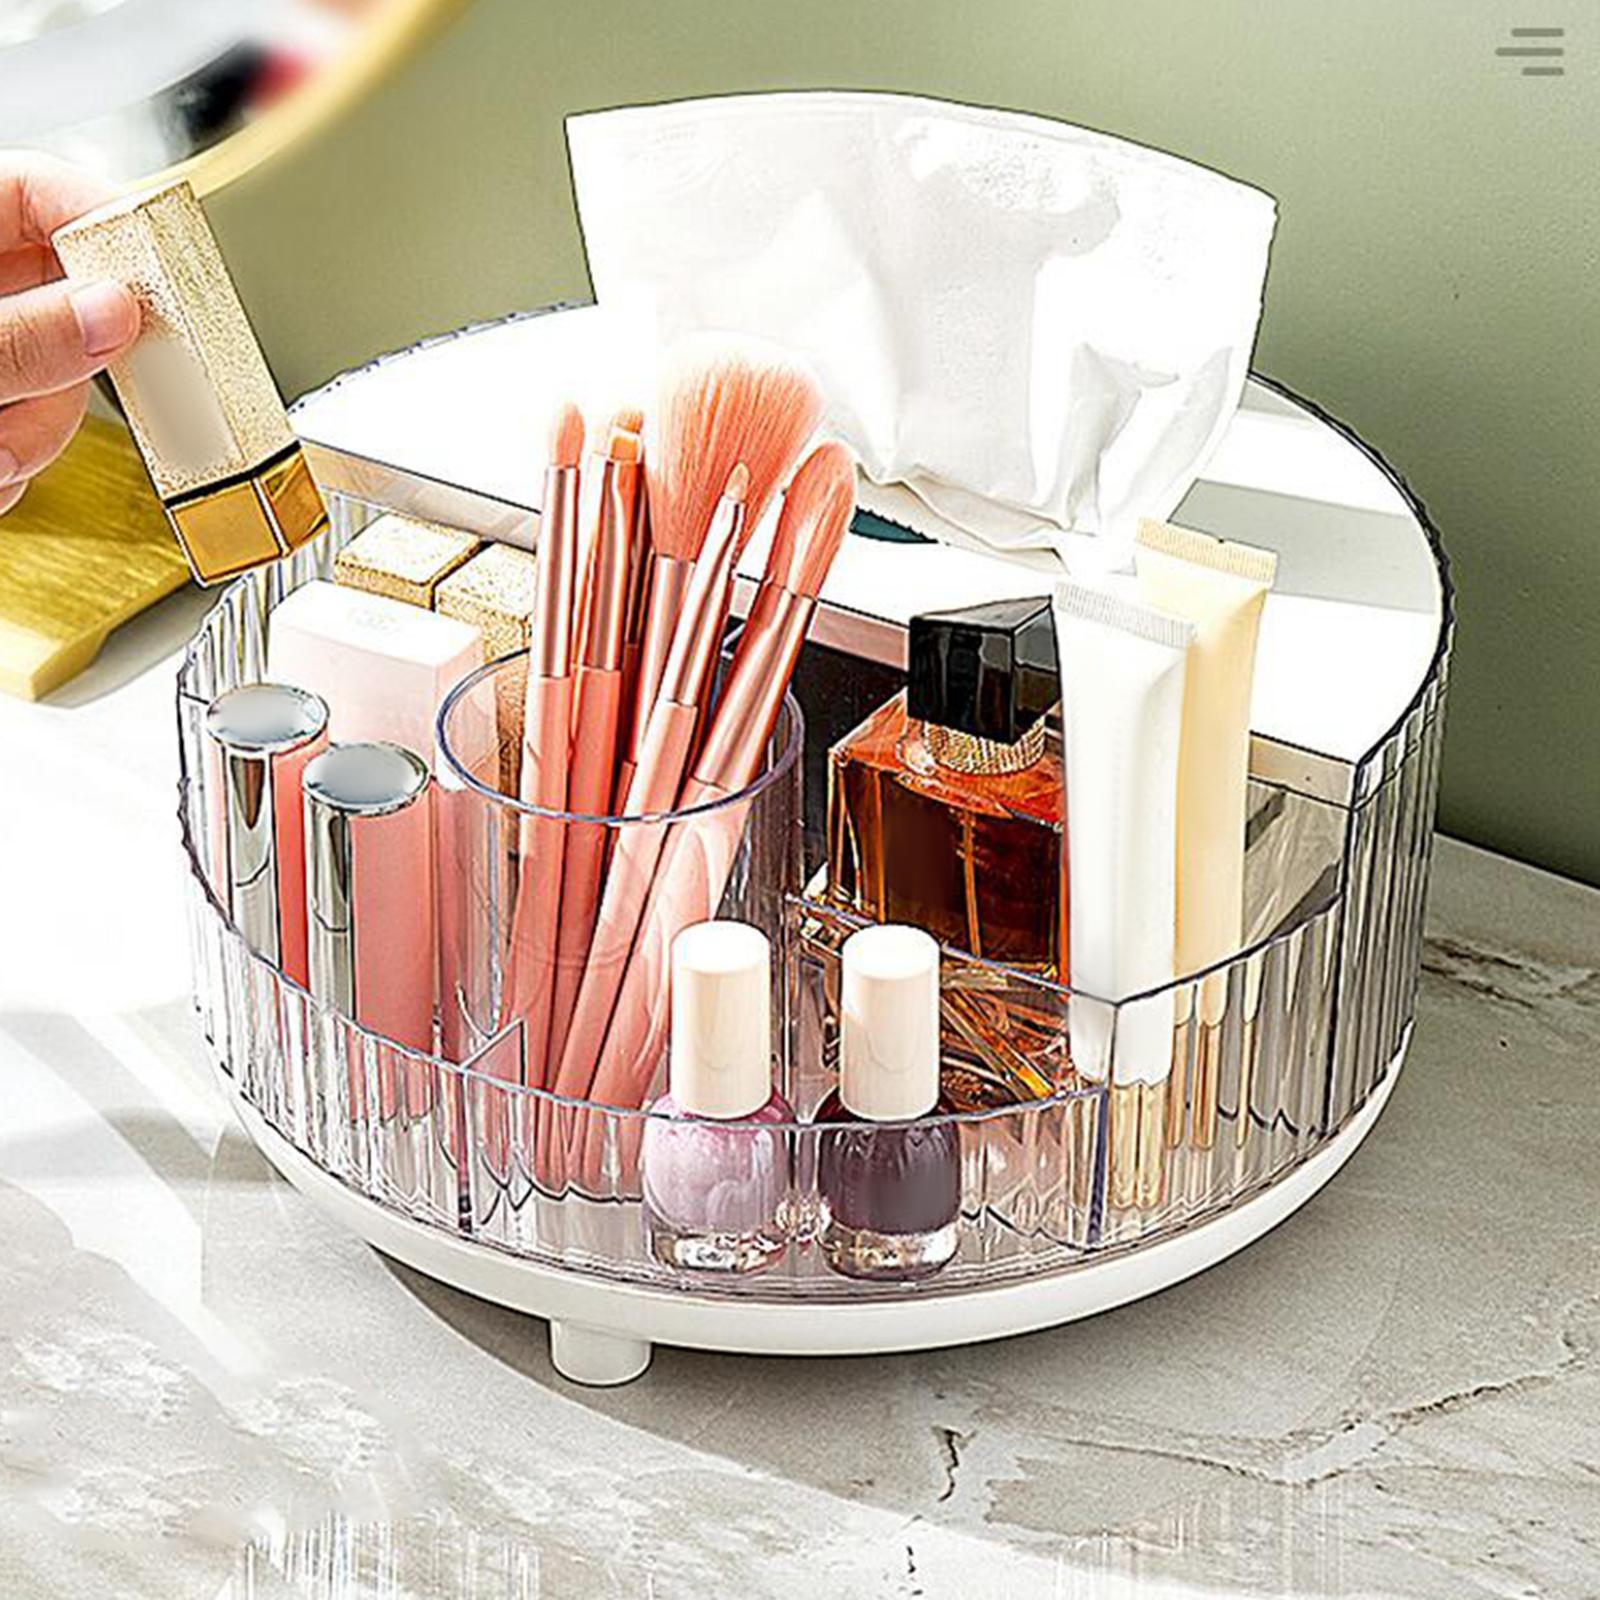 Turntable Cosmetic Makeup Rack Organizer, Makeup Brush Holder Cosmetic Storage Box for Bedroom